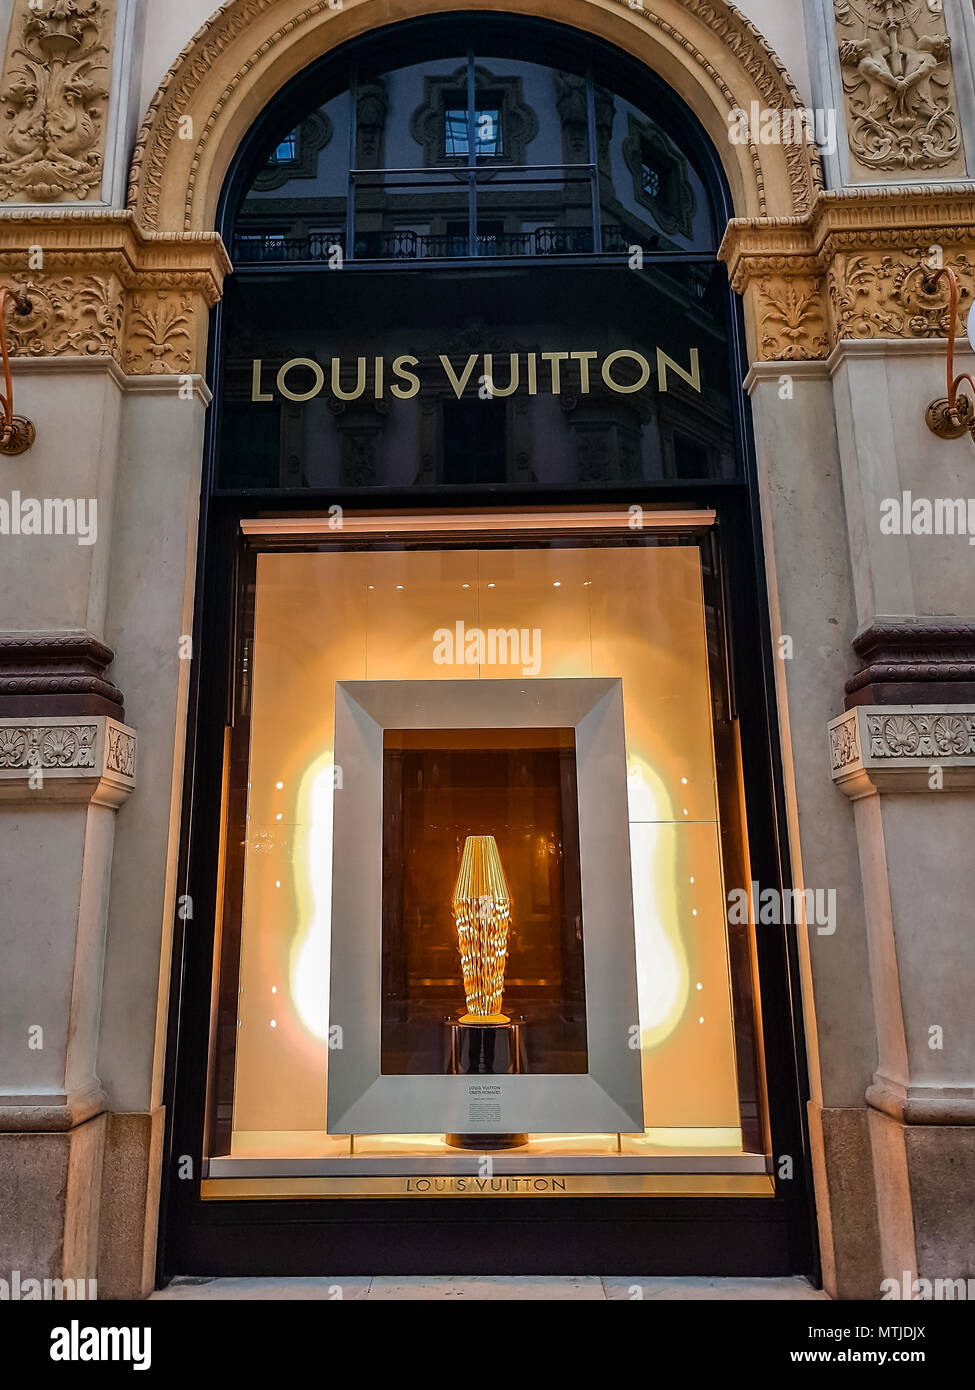 Milan, Italy - September 24, 2017: Louis Vuitton Store In Milan. Fashion  Week Louis Vuitton Shopping Stock Photo, Picture and Royalty Free Image.  Image 93825136.